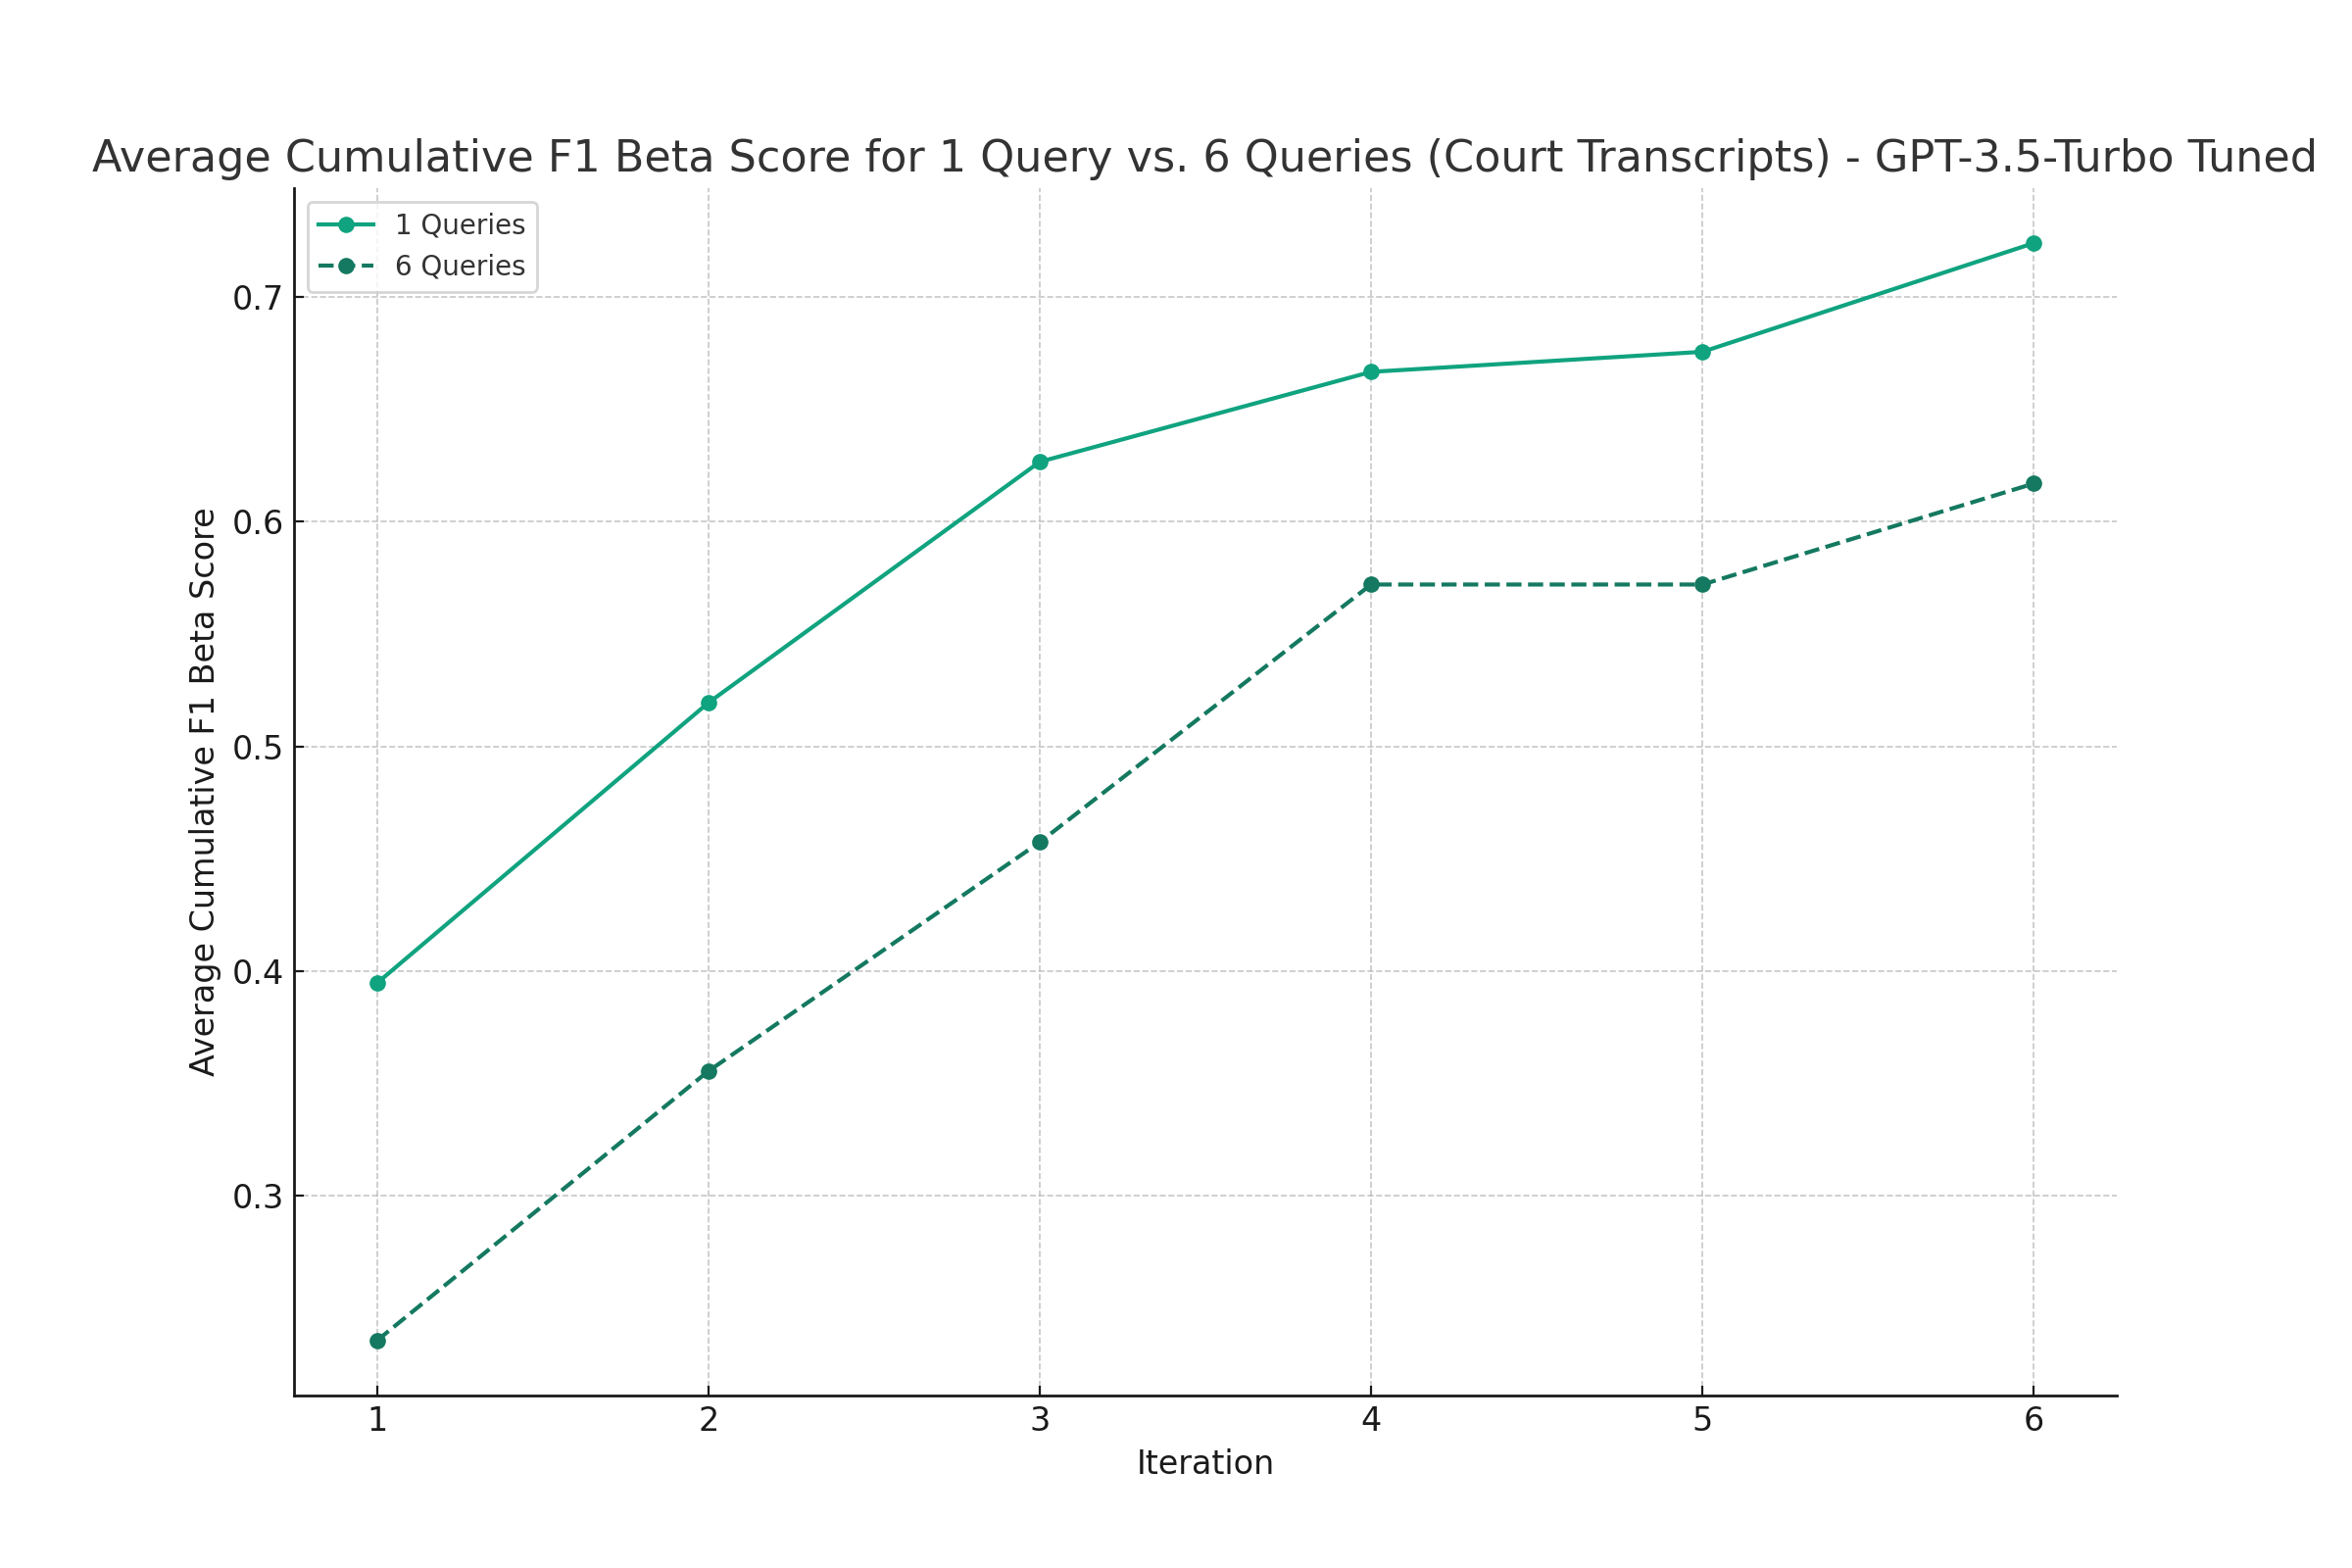 Figure 4: Average Cumulative F1 Beta Score for 1 Query vs. 6 Queries (Court Transcripts) - Model: GPT-3